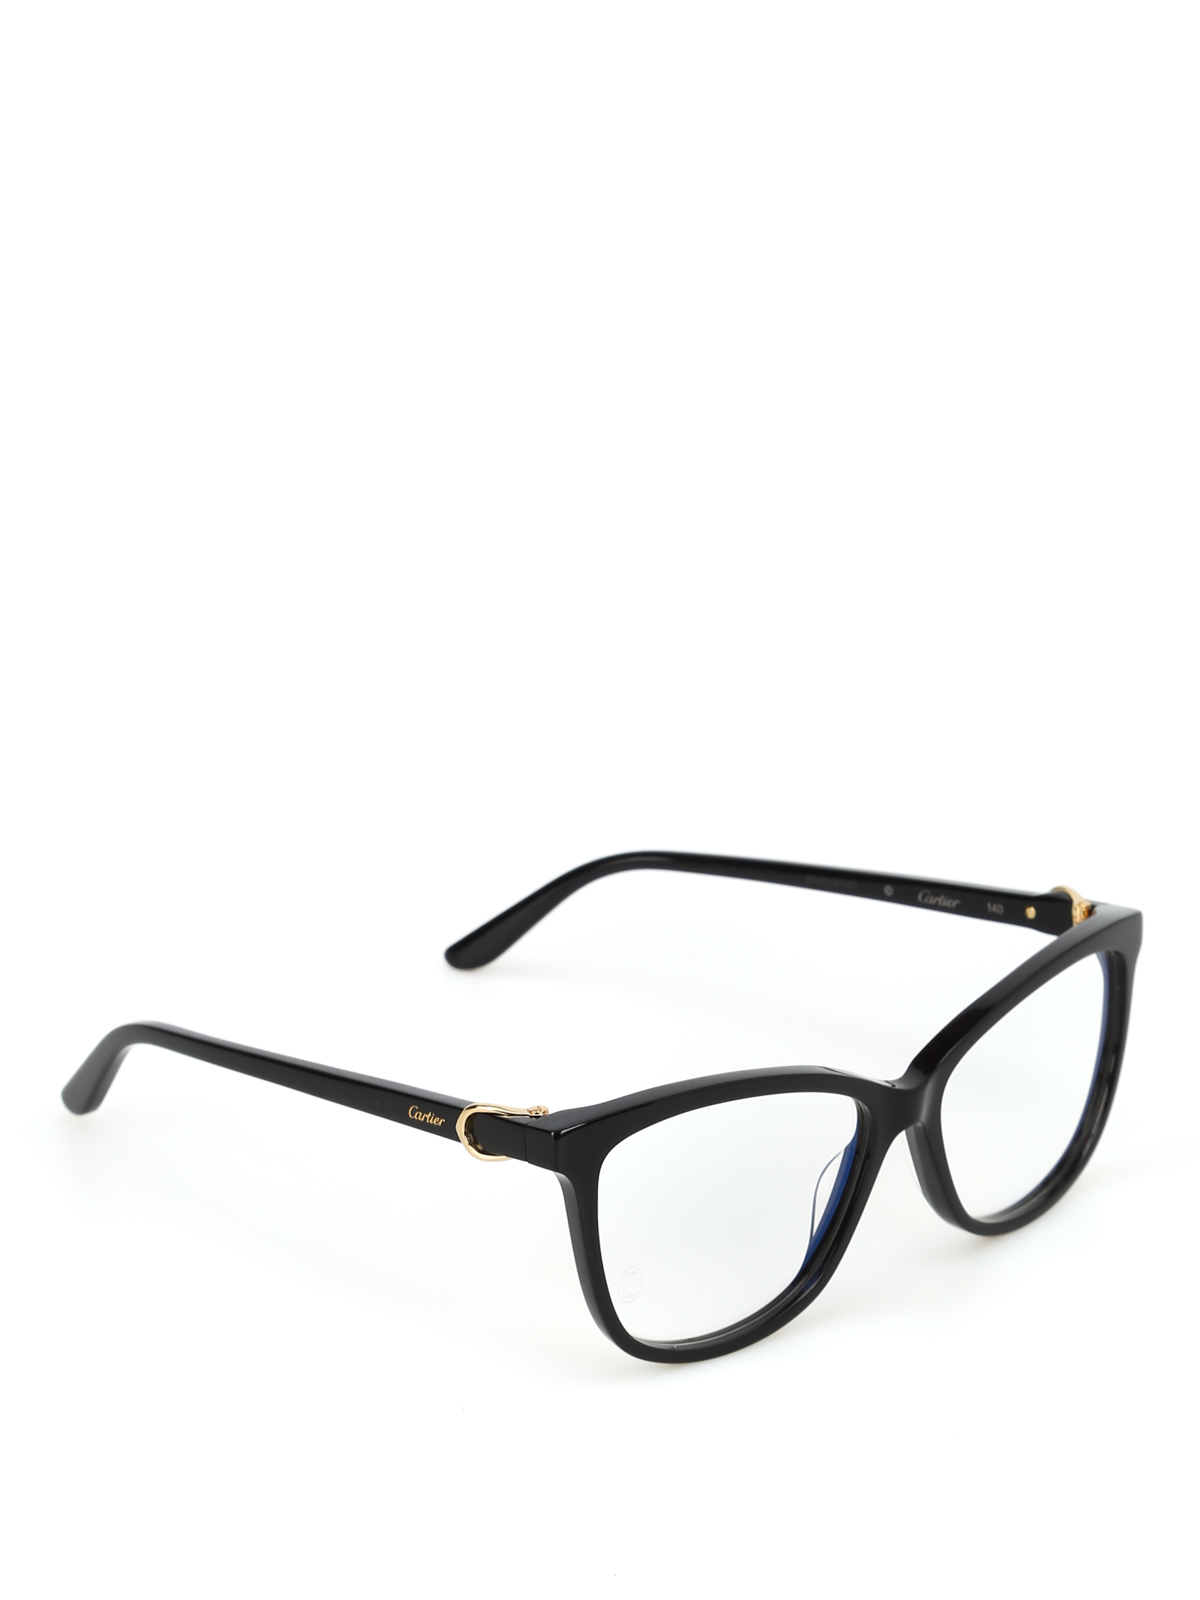 Cartier - Black acetate eyeglasses 